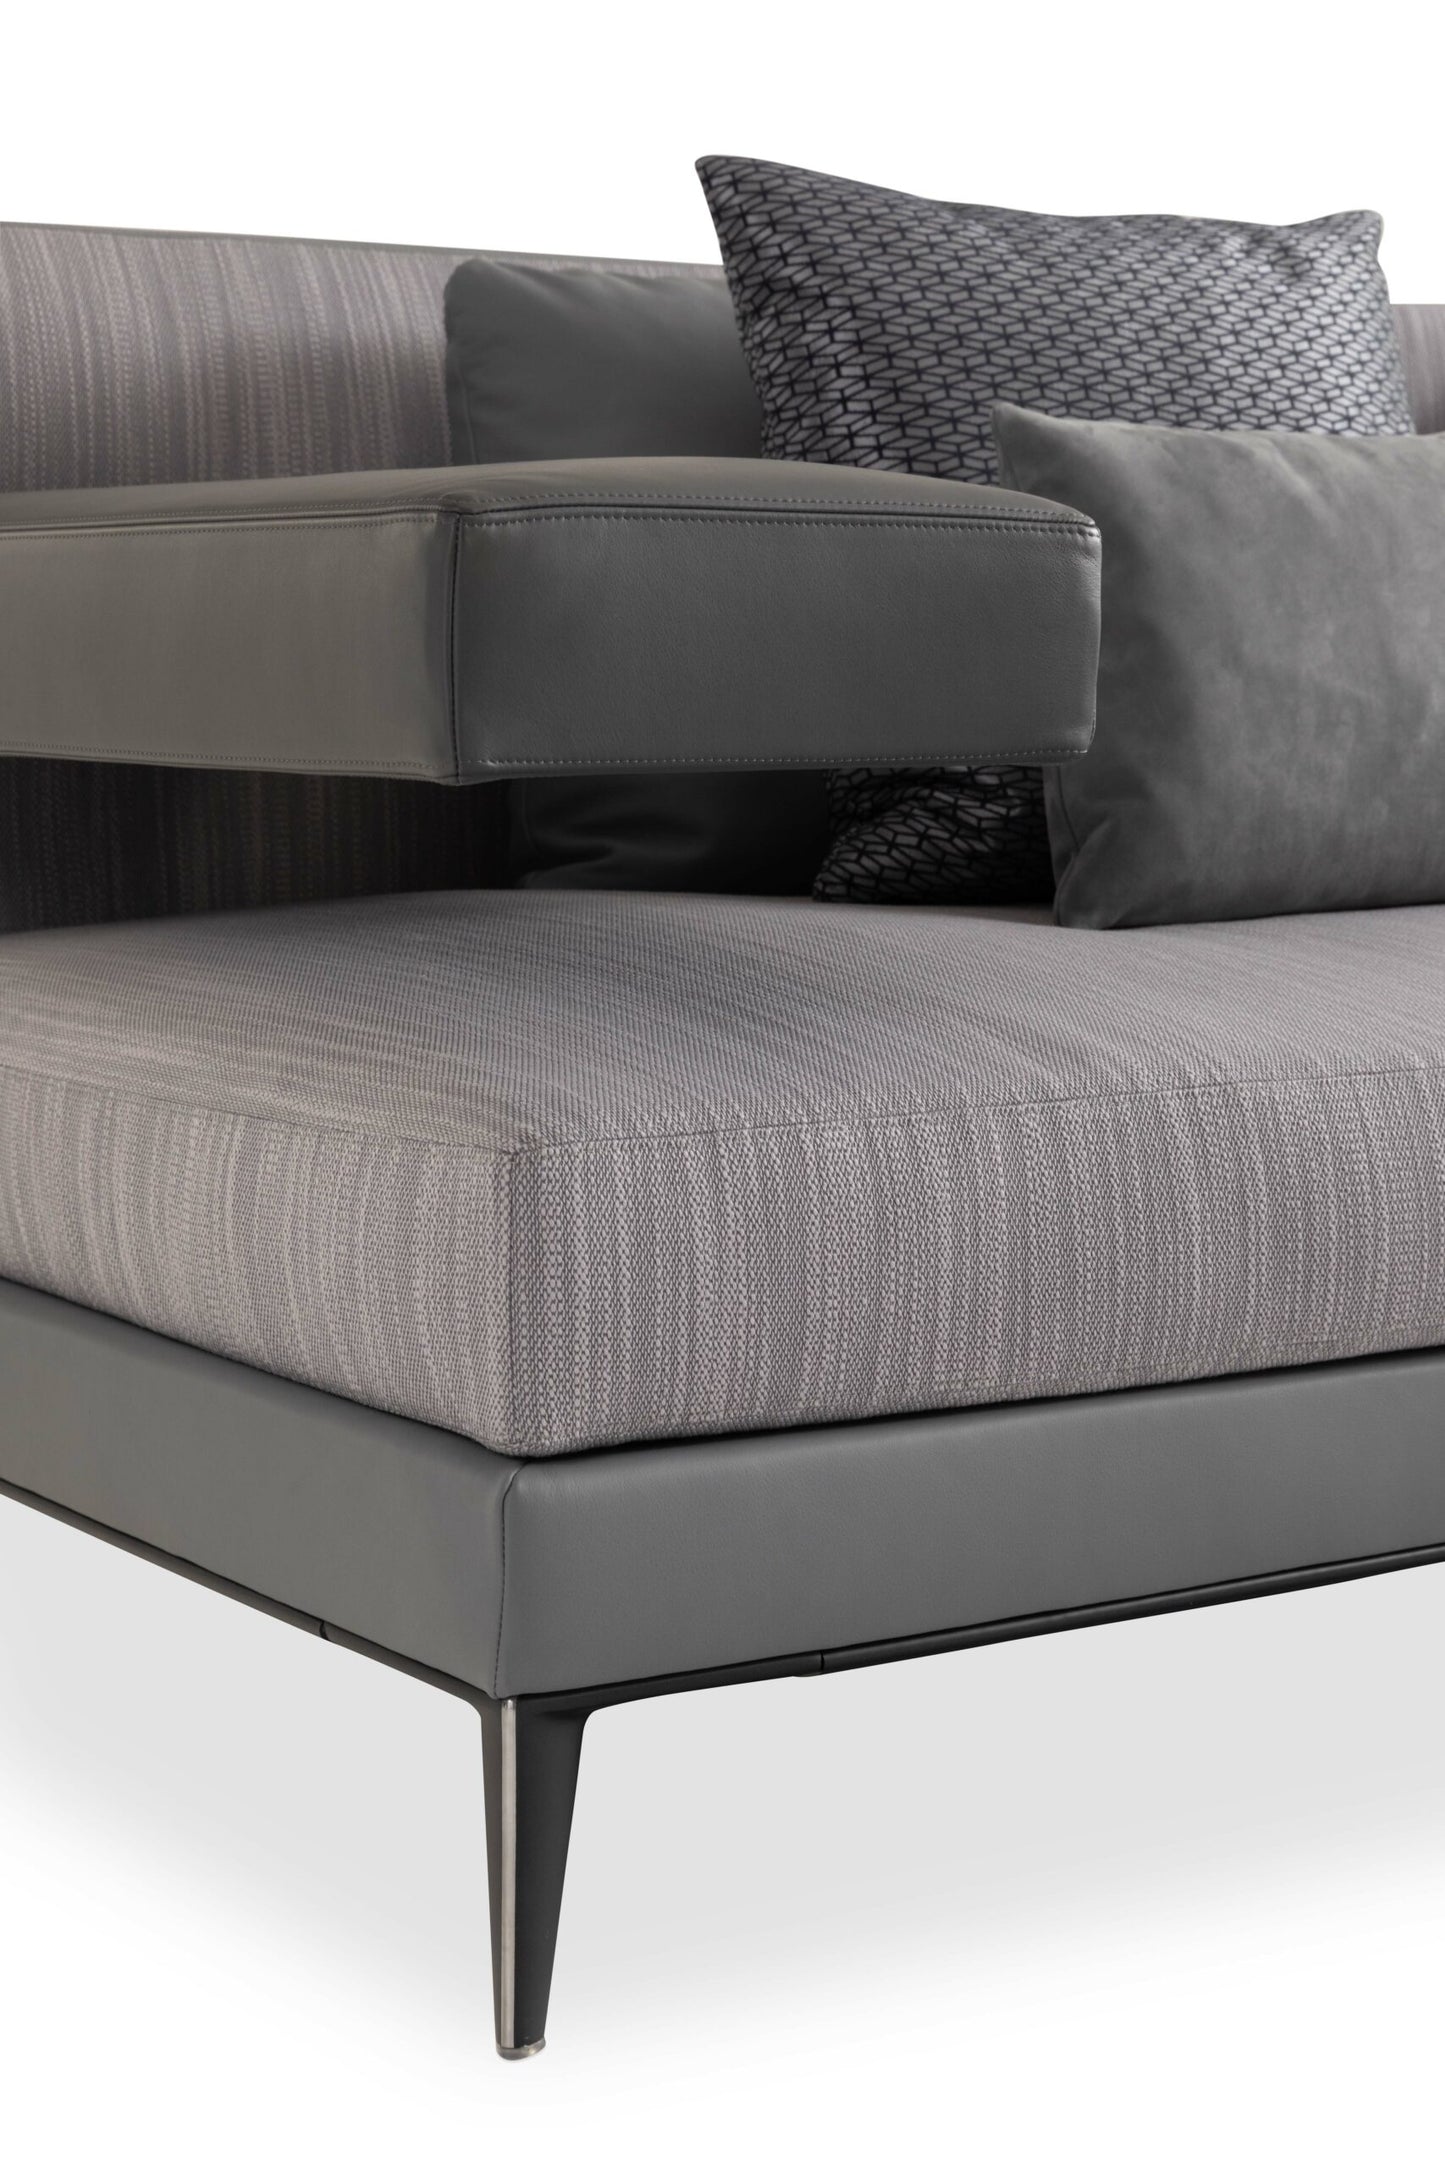 bugatti-home-flow-sofa-grey-detail